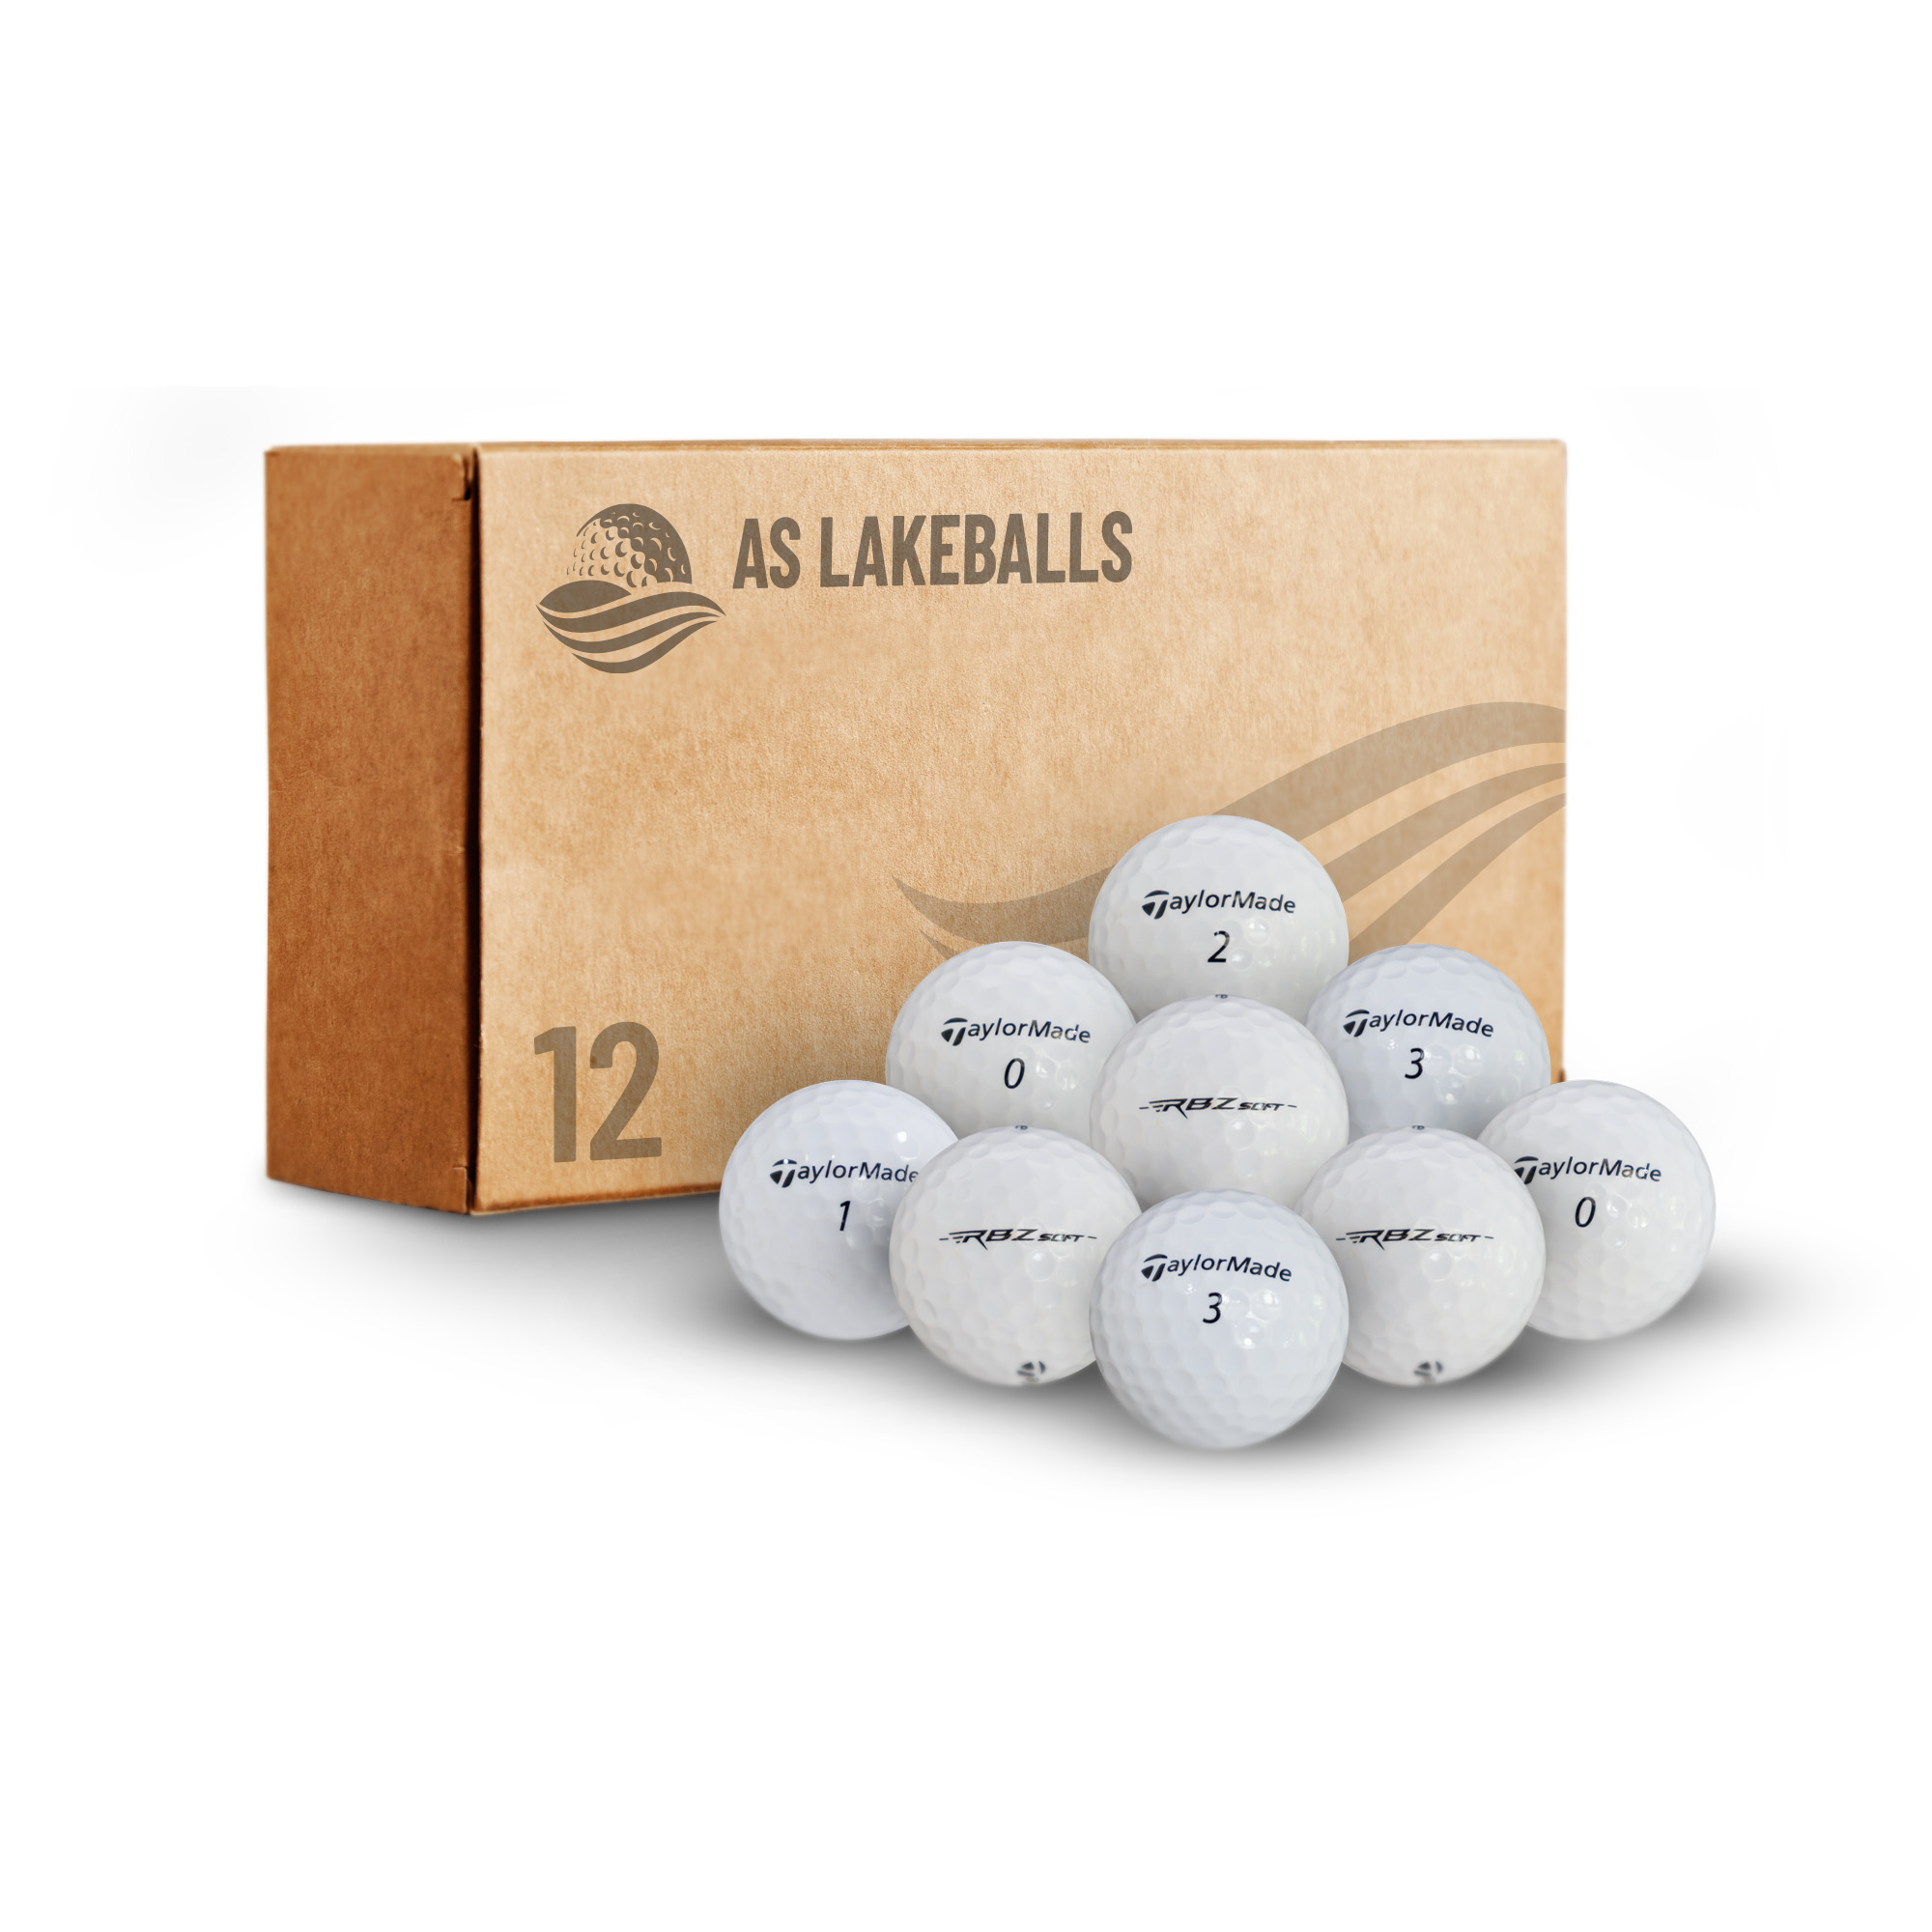 12 Stück Taylor Made Rocketballz / RBZ AA-AAA Lakeballs bei AS Lakeballs günstig kaufen